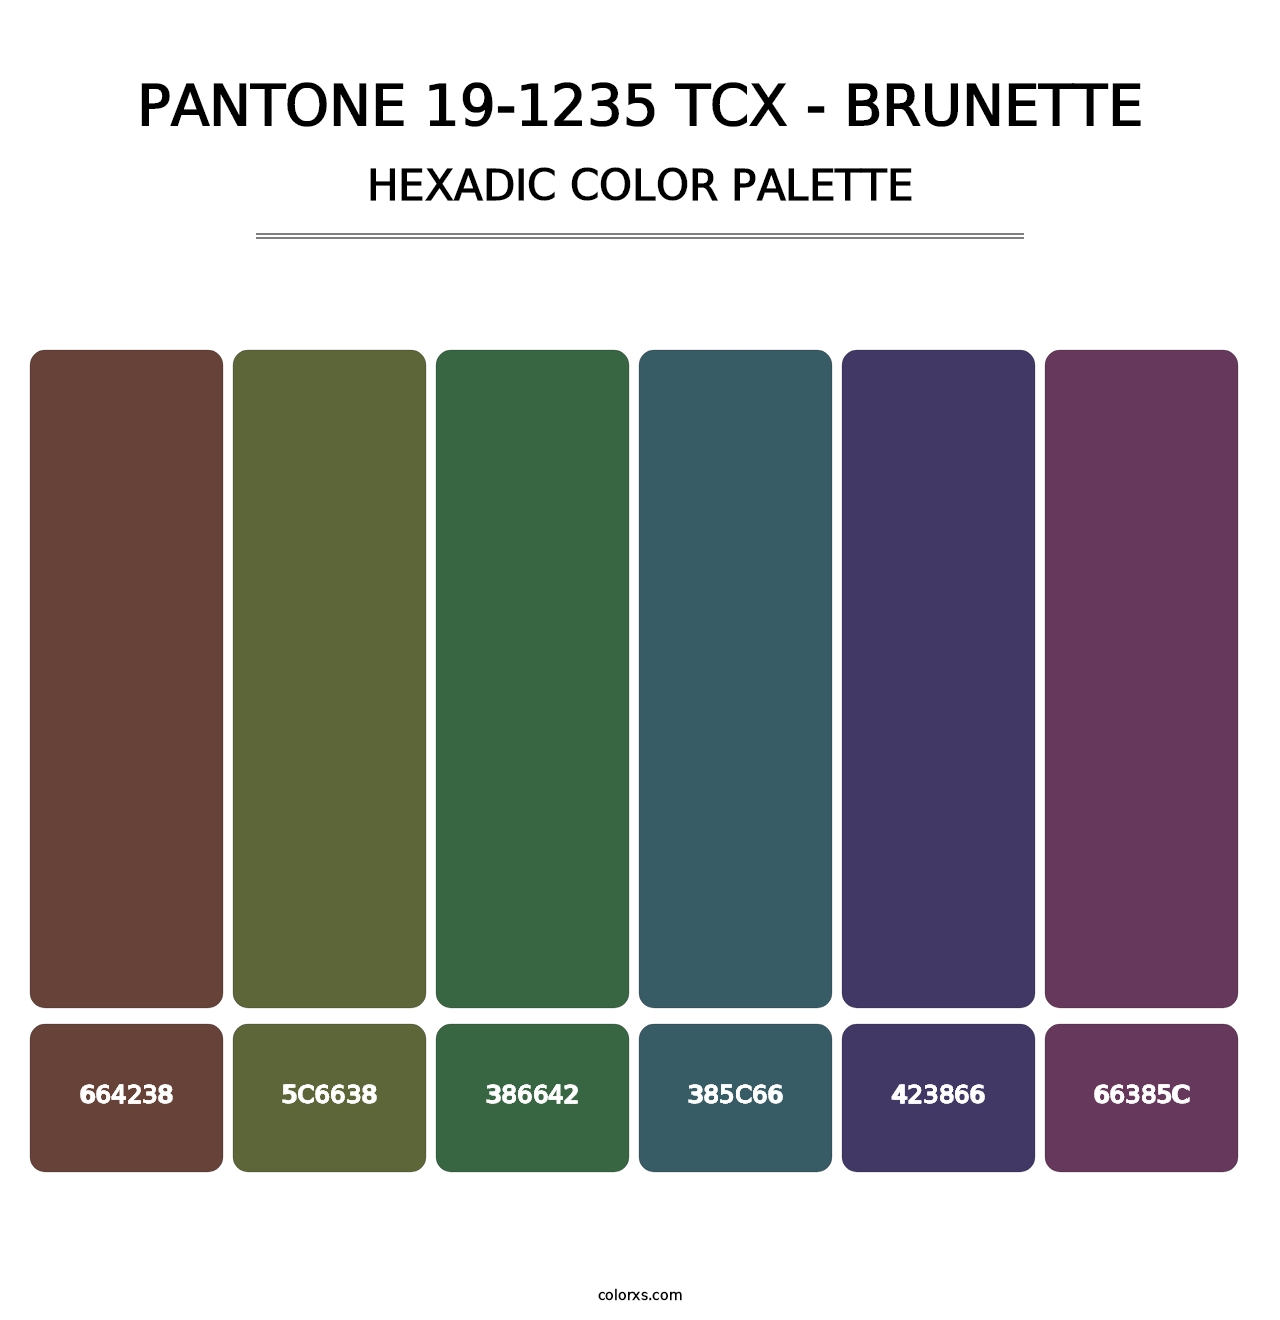 PANTONE 19-1235 TCX - Brunette - Hexadic Color Palette